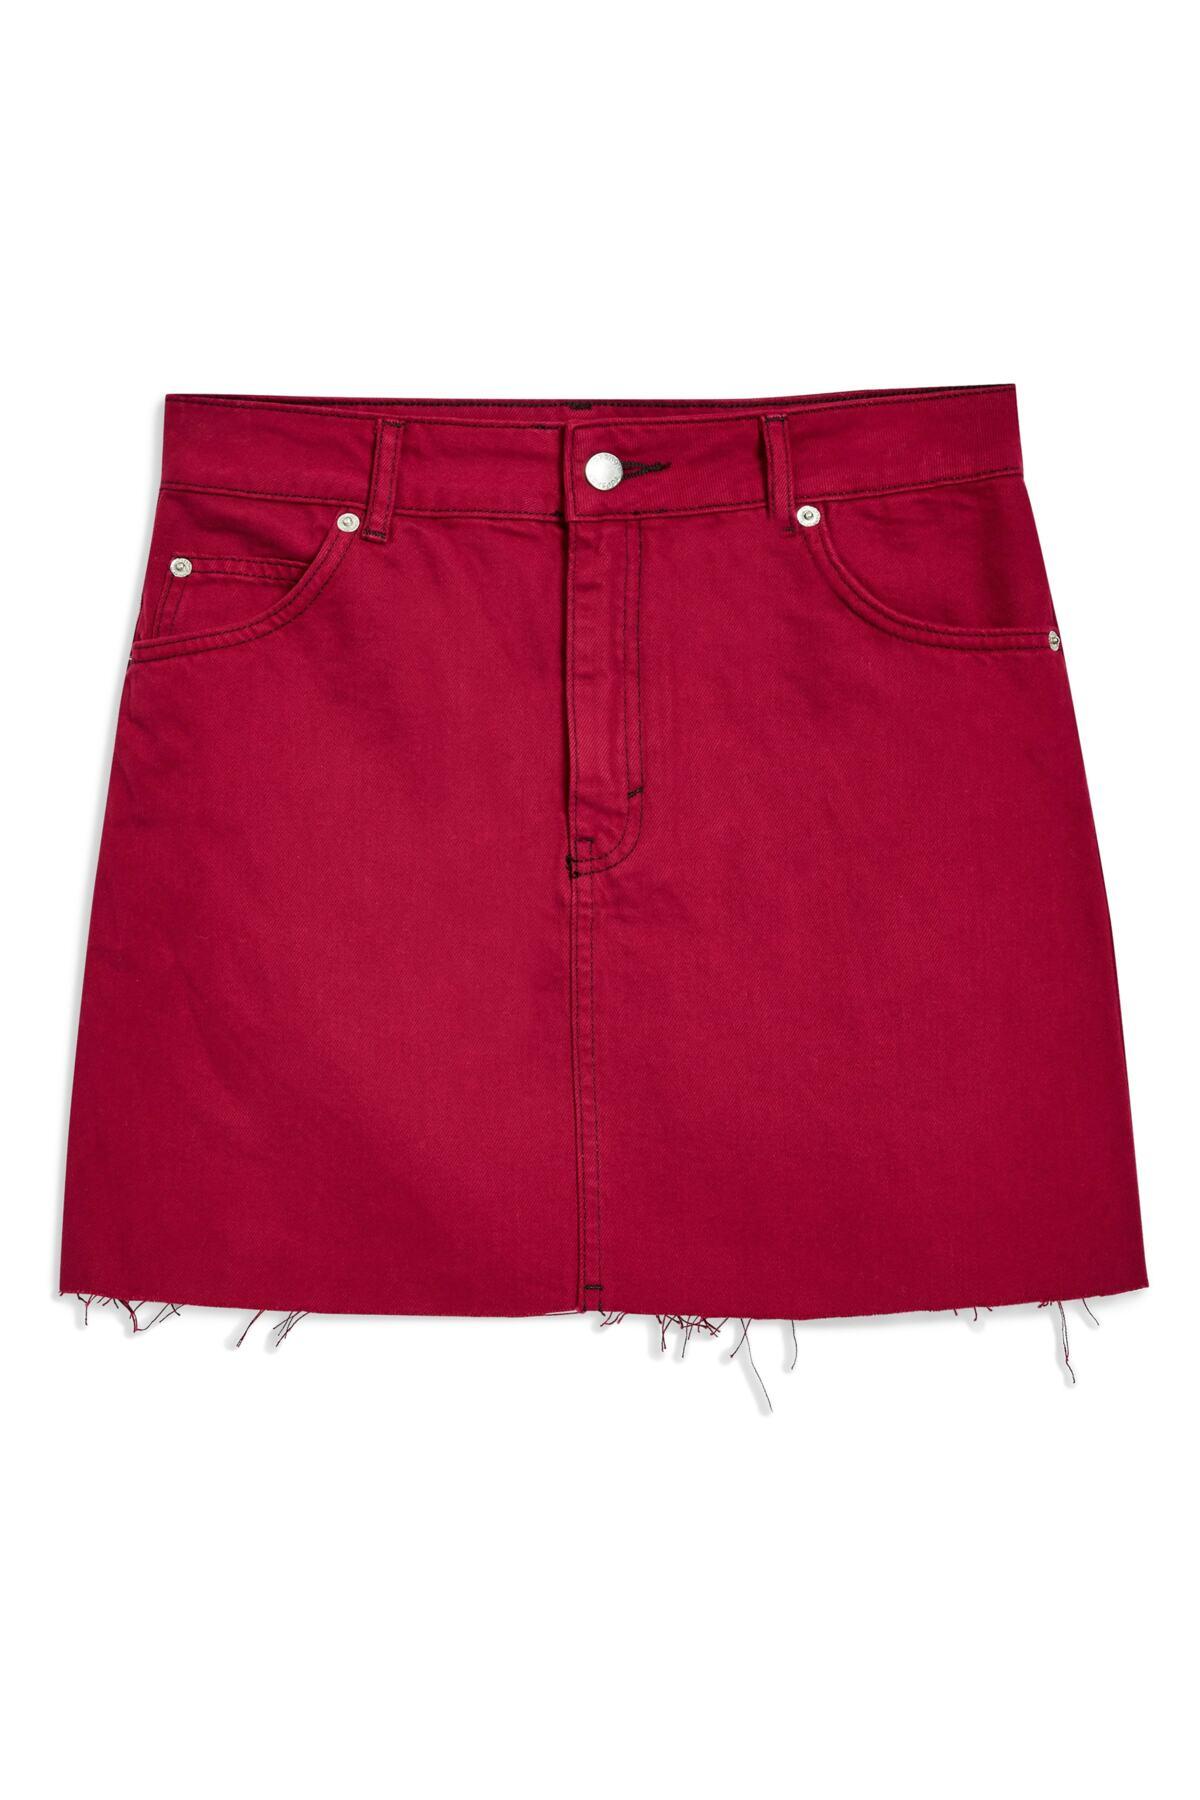 TOPSHOP Denim Skirt in Red - Lyst